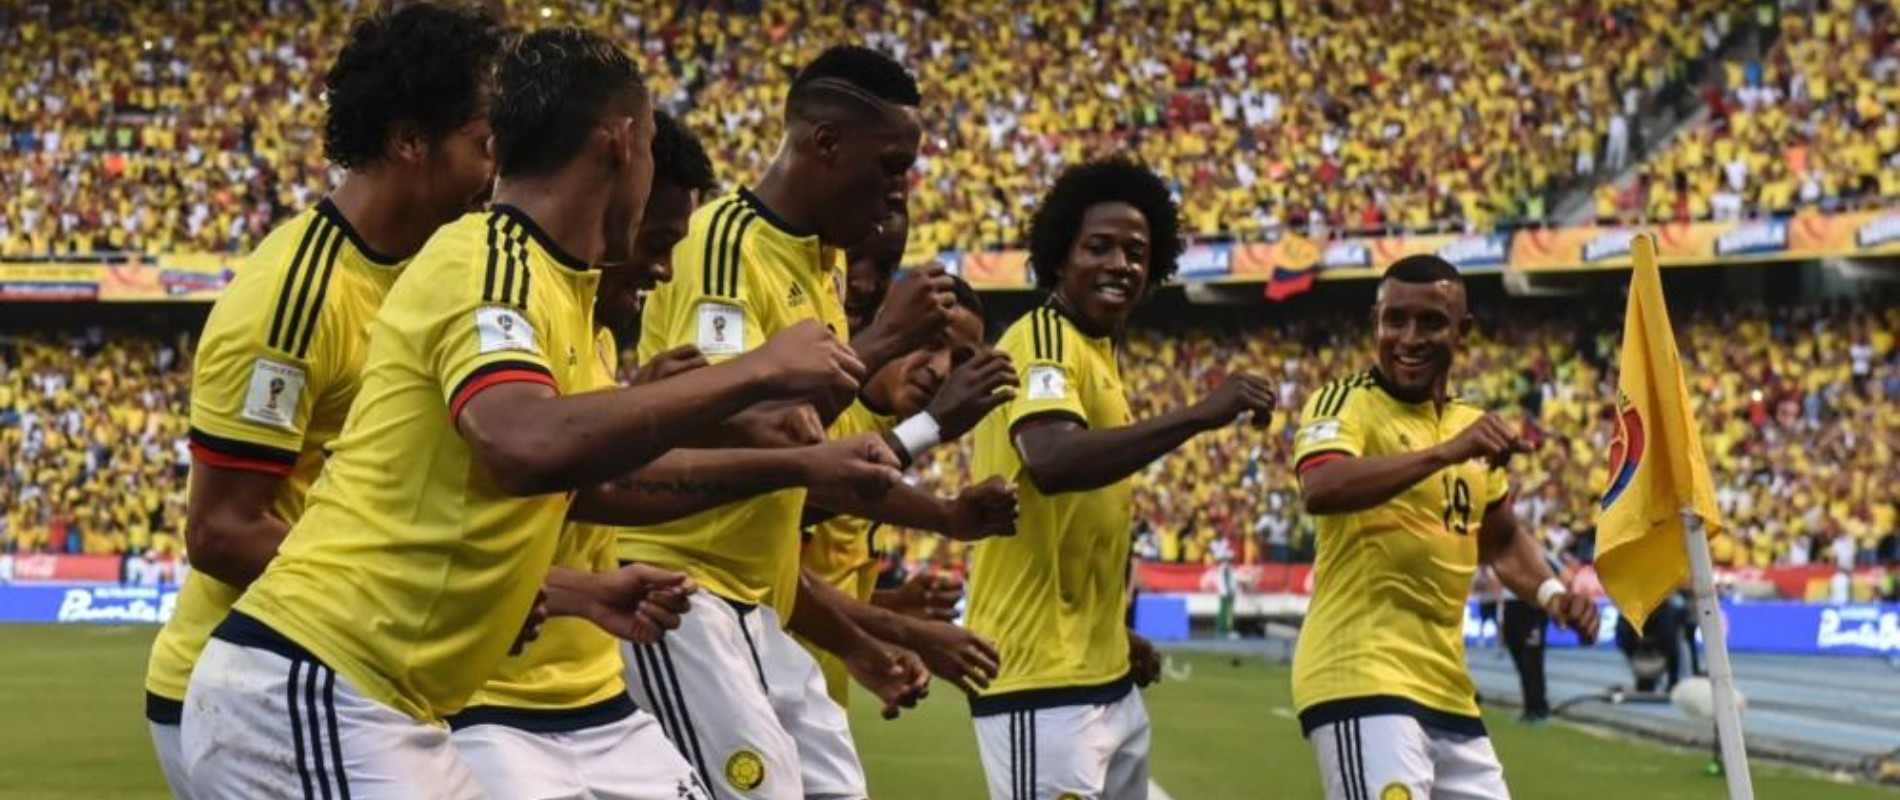 Selección Colombia celebrando un gol bailando